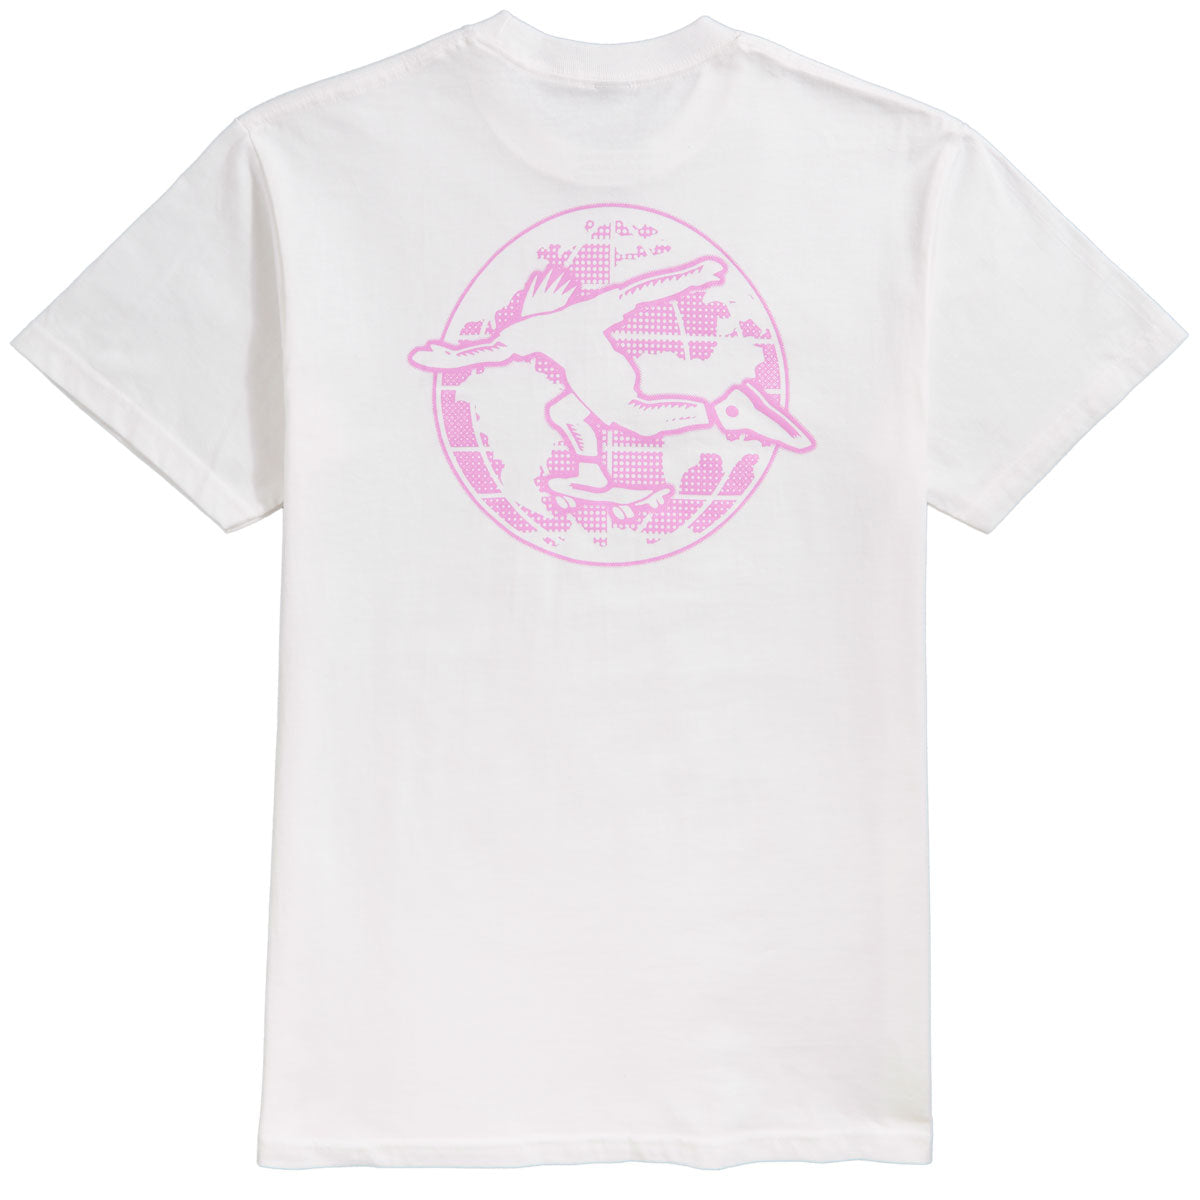 CCS Neo Globe T-Shirt - White/Pink image 1